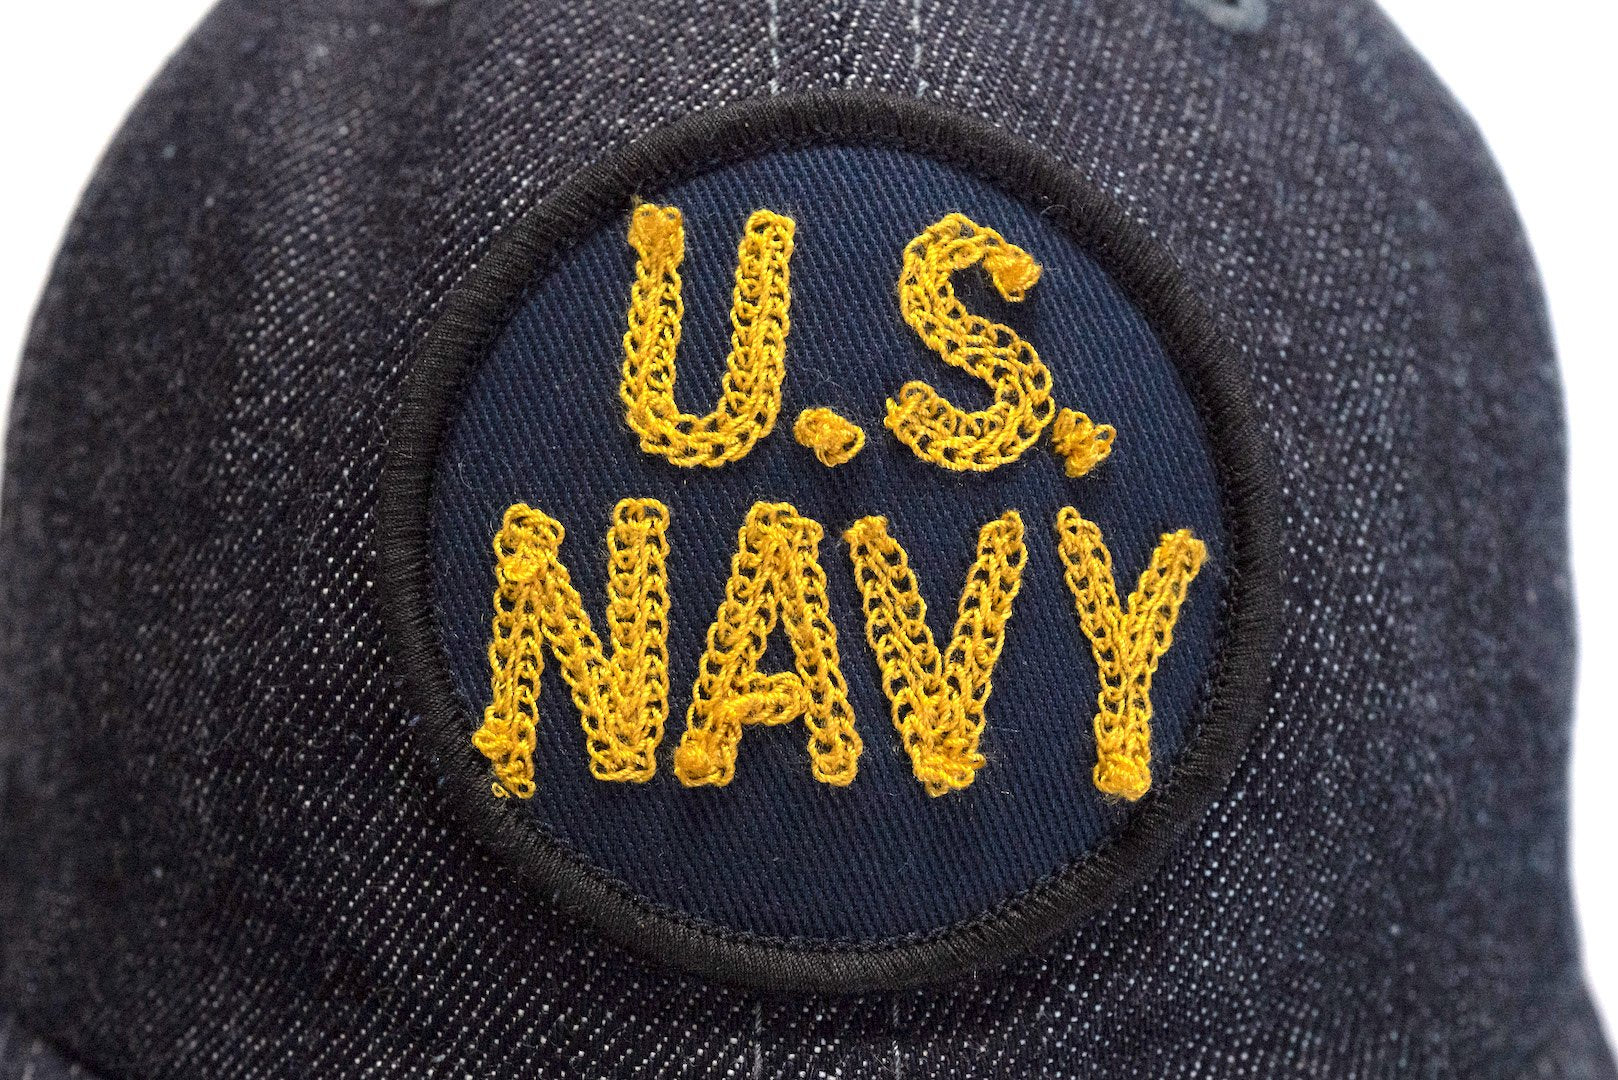 UES "U.S. Navy" Denim Baseball Cap (Navy)